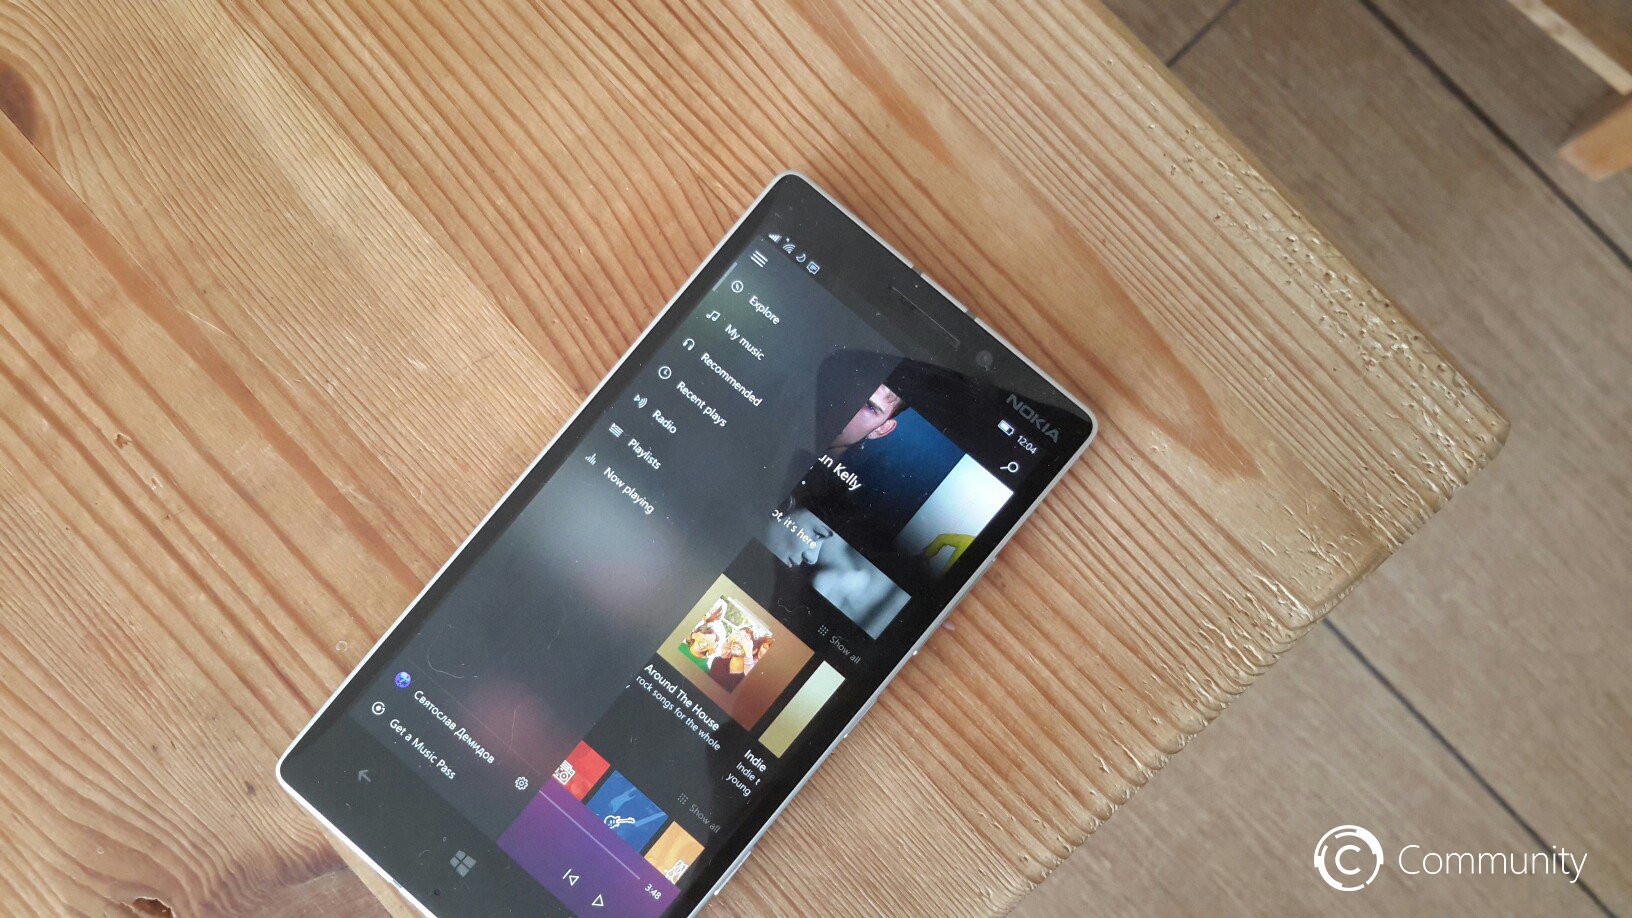 Groove Музыка и Кино & ТВ на Windows 10 Mobile получили новые элементы Fluent (NEON) дизайна